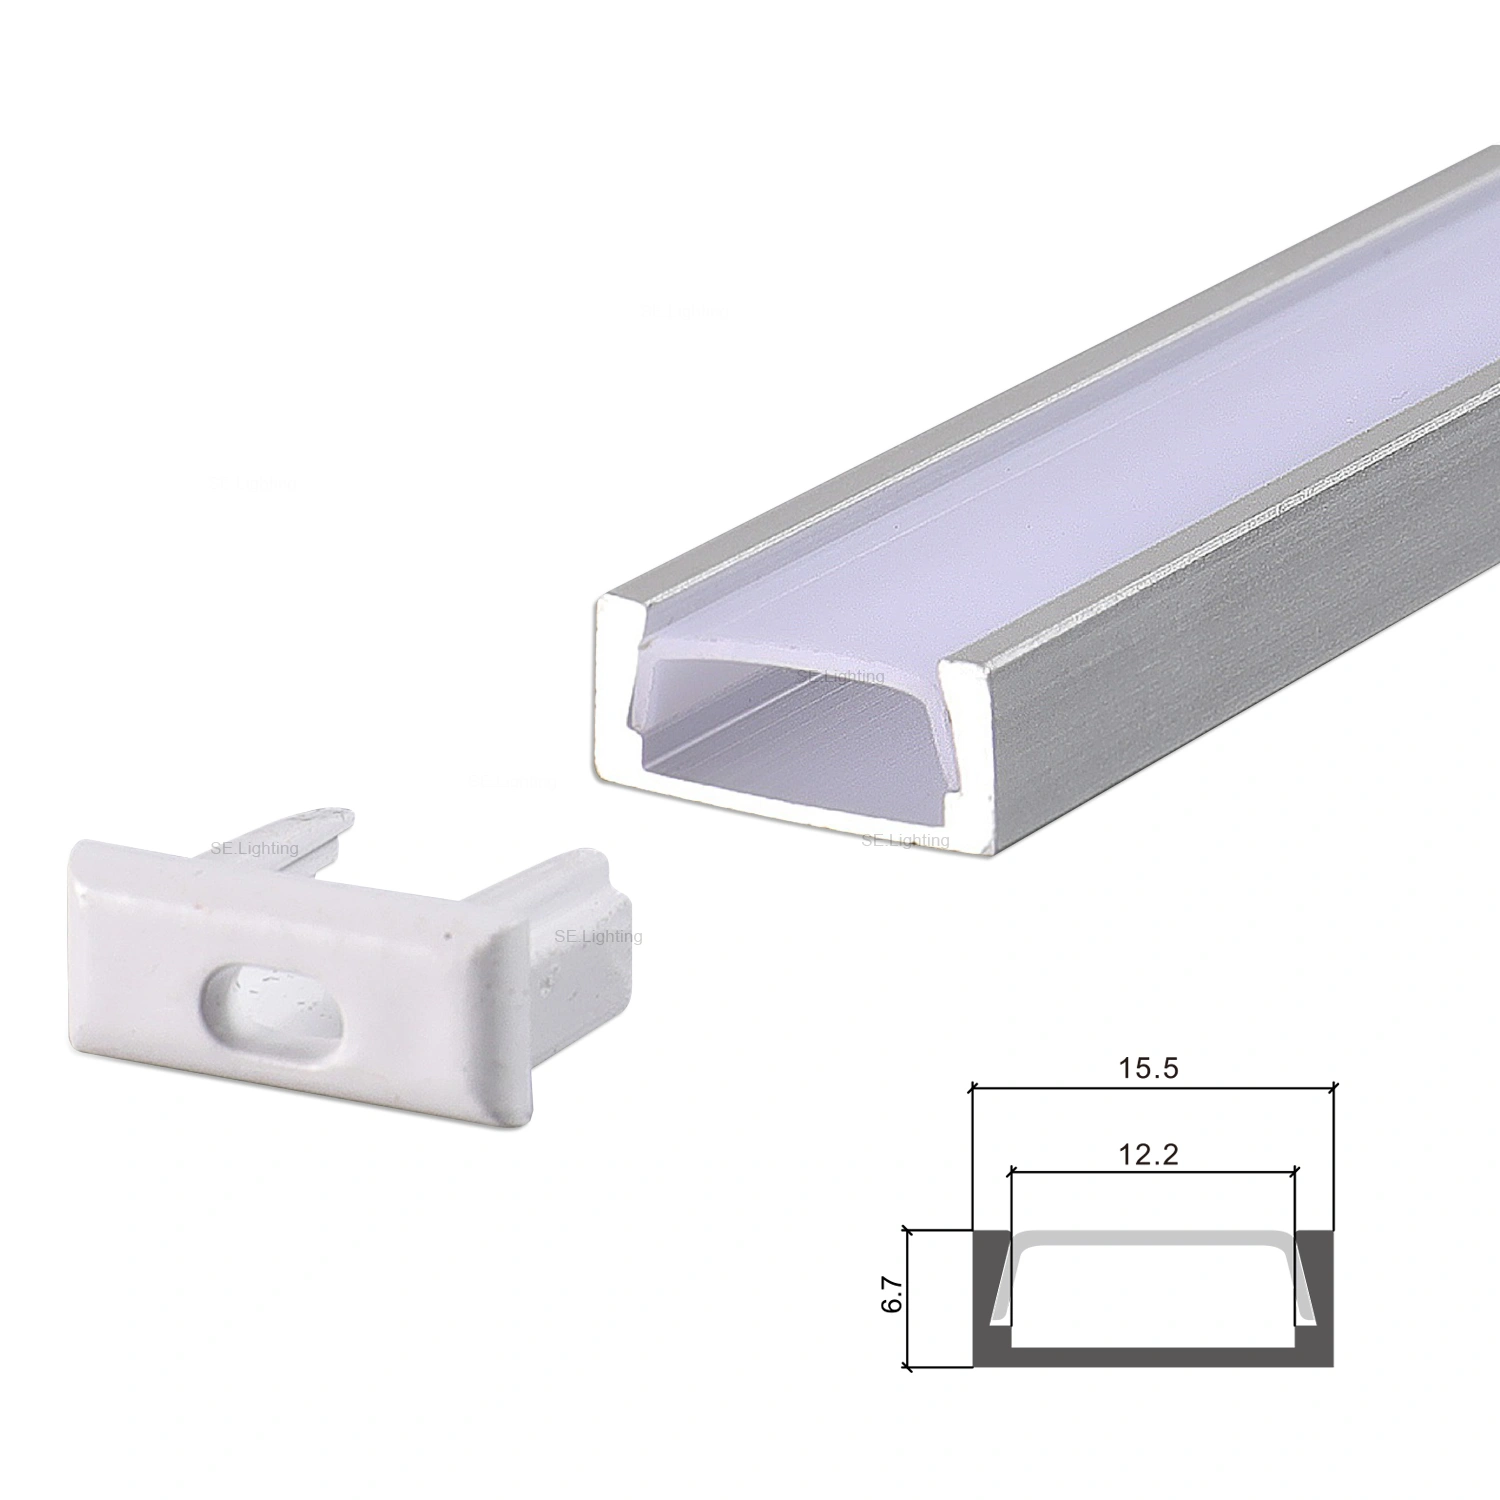 15x06mm LED Profile Aluminum